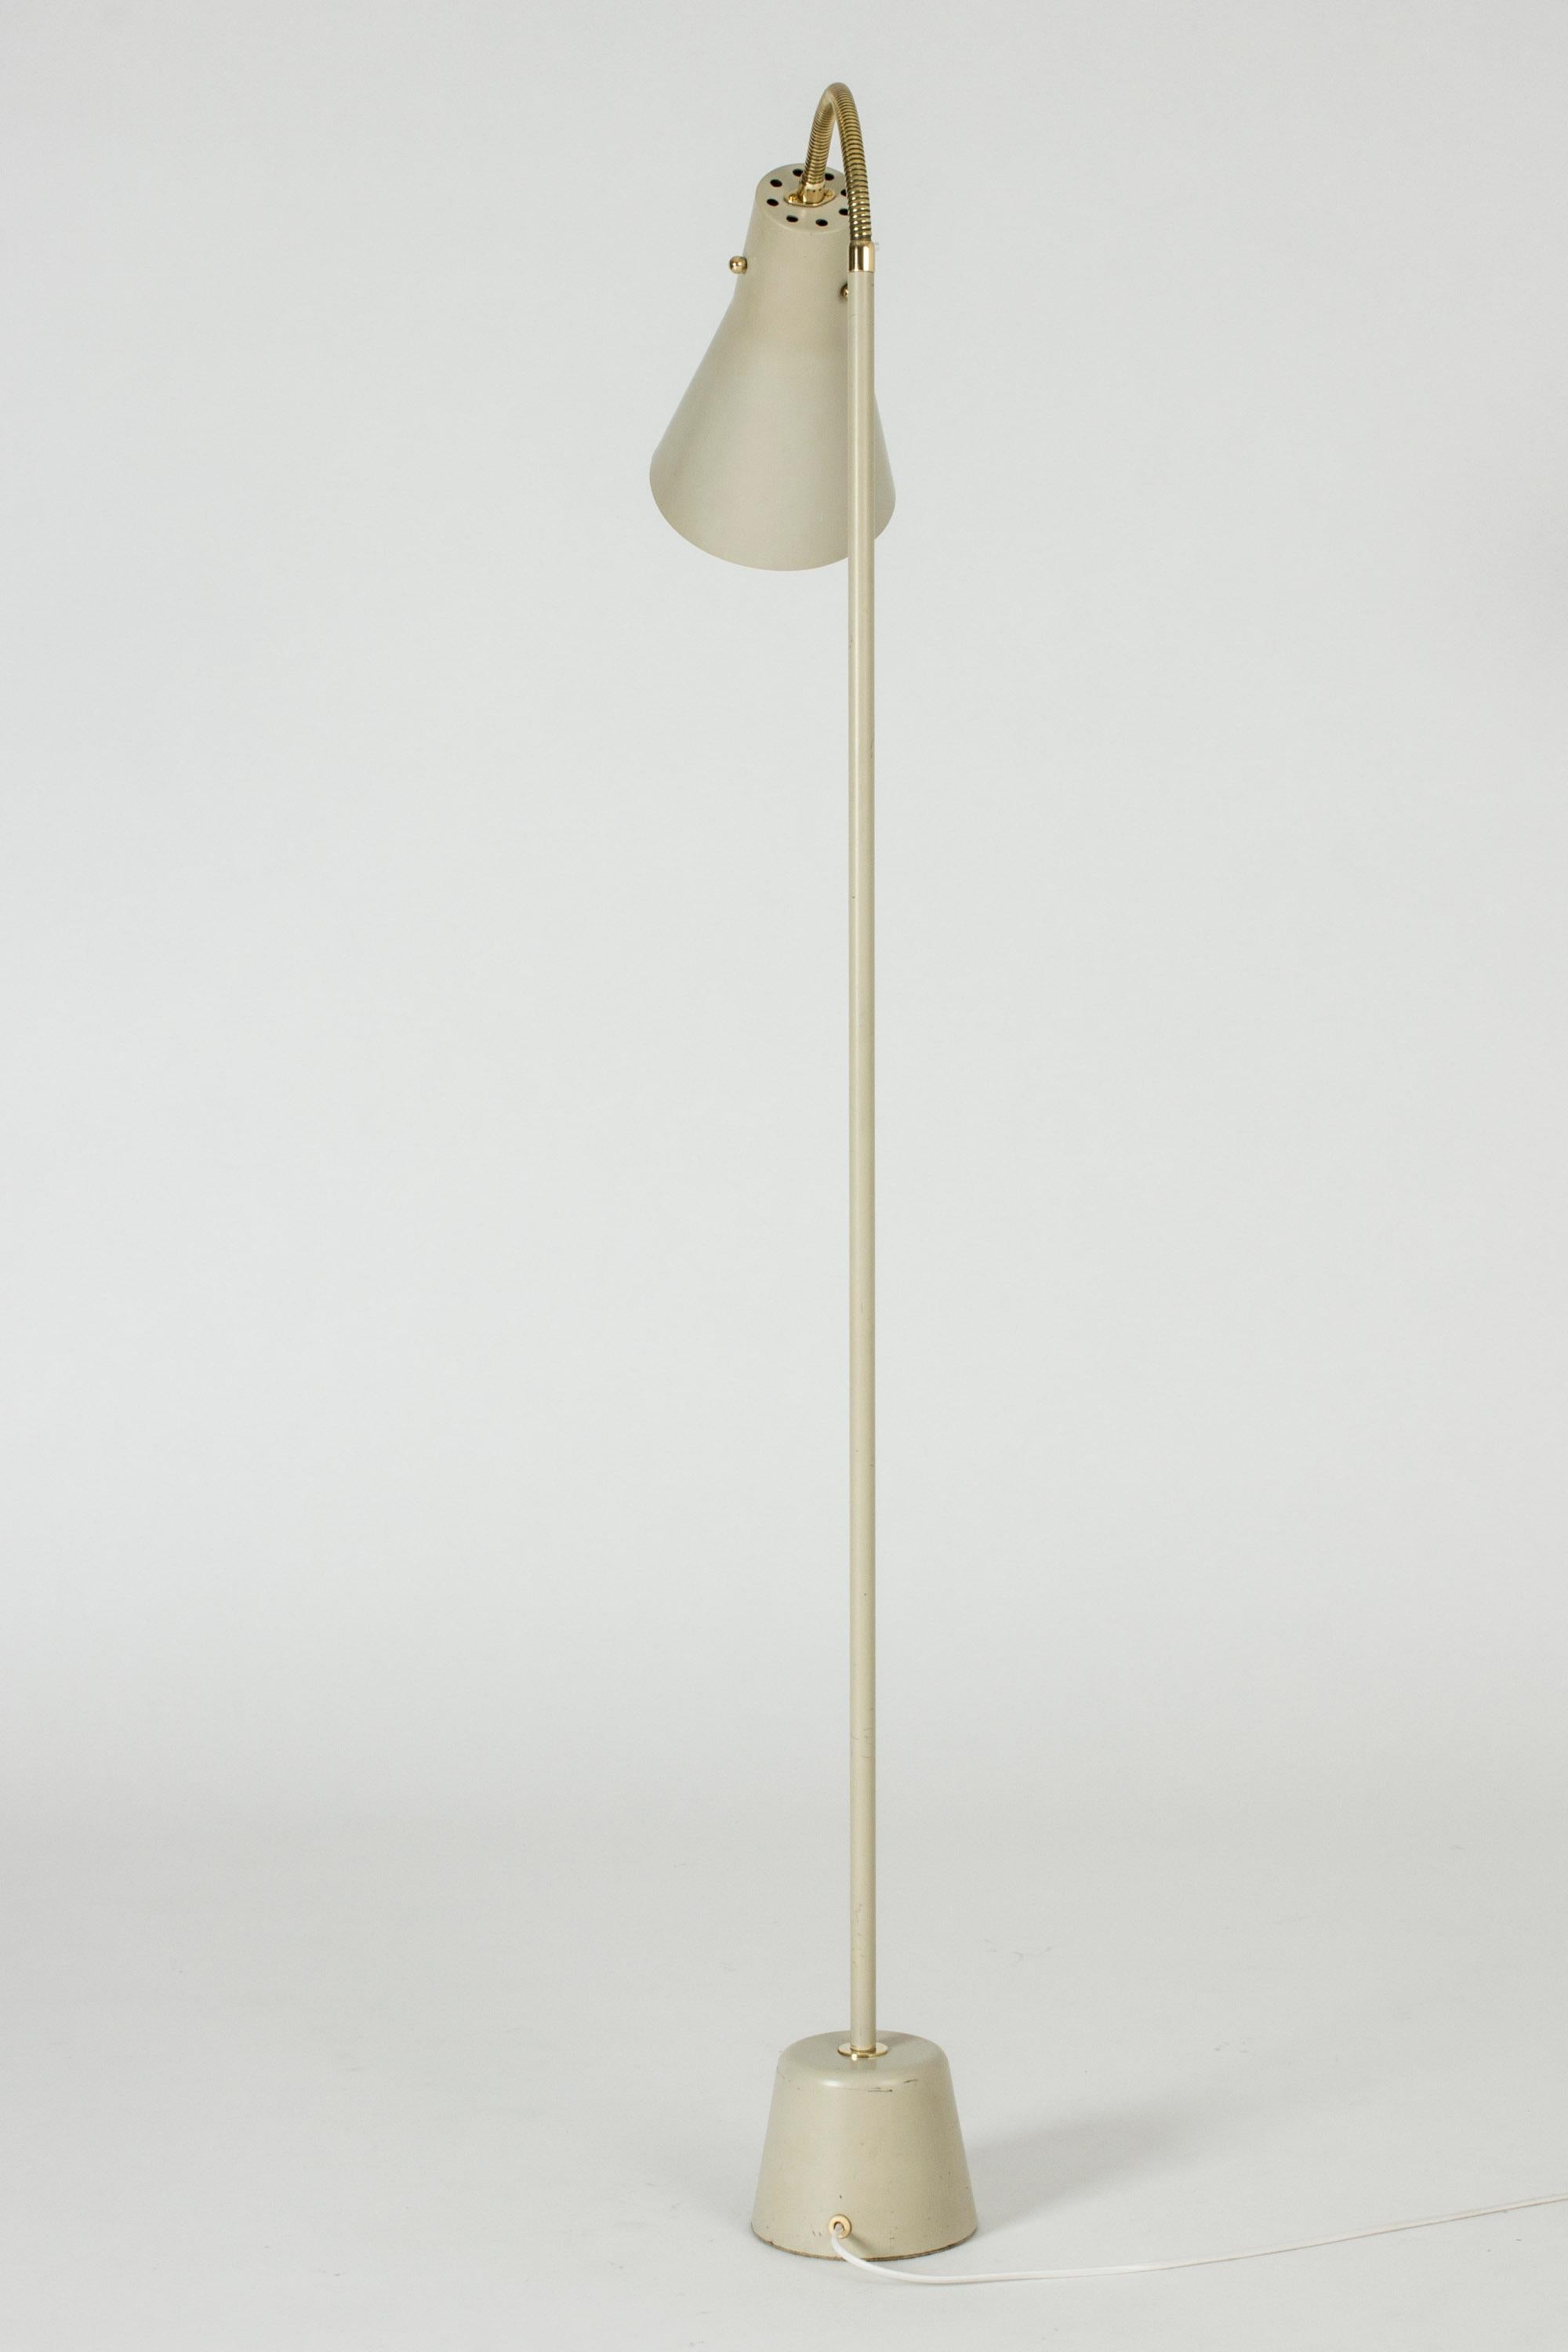 Scandinavian Modern Lacquered Metal Floor Lamp by Lisa Johansson-Pape